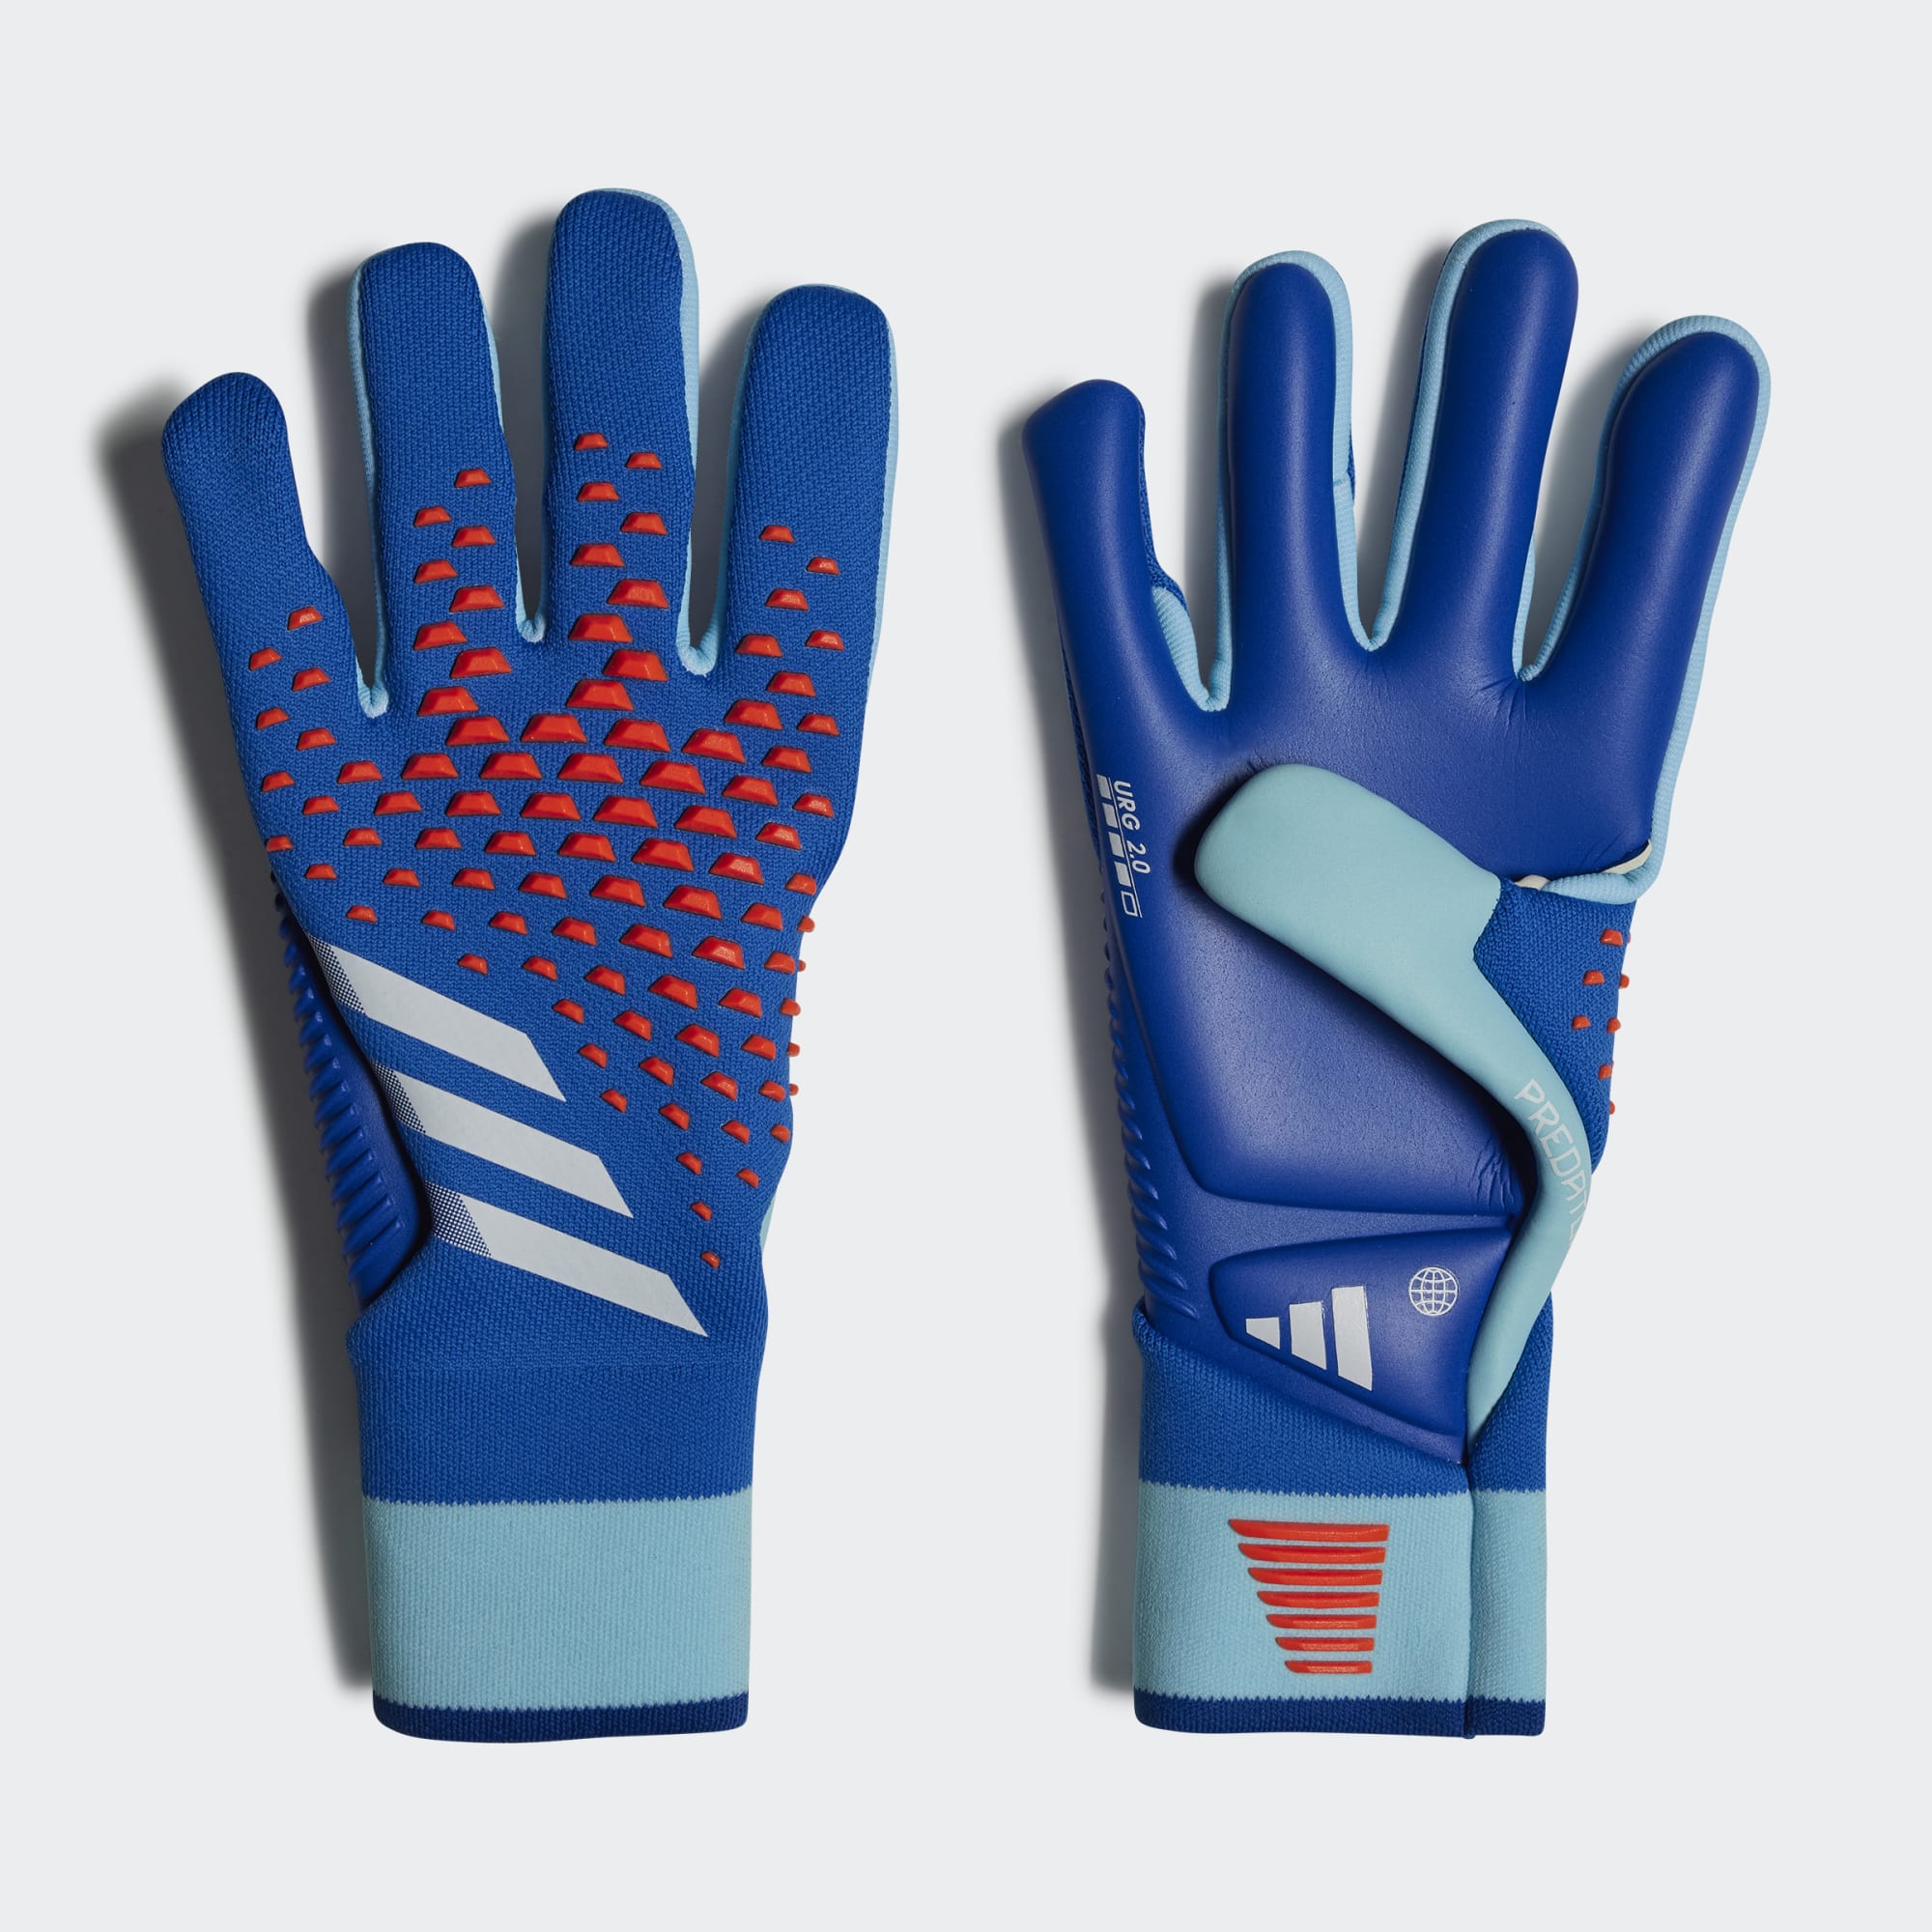 Adidas Predator Pro Goalkeeper Gloves - Size 7